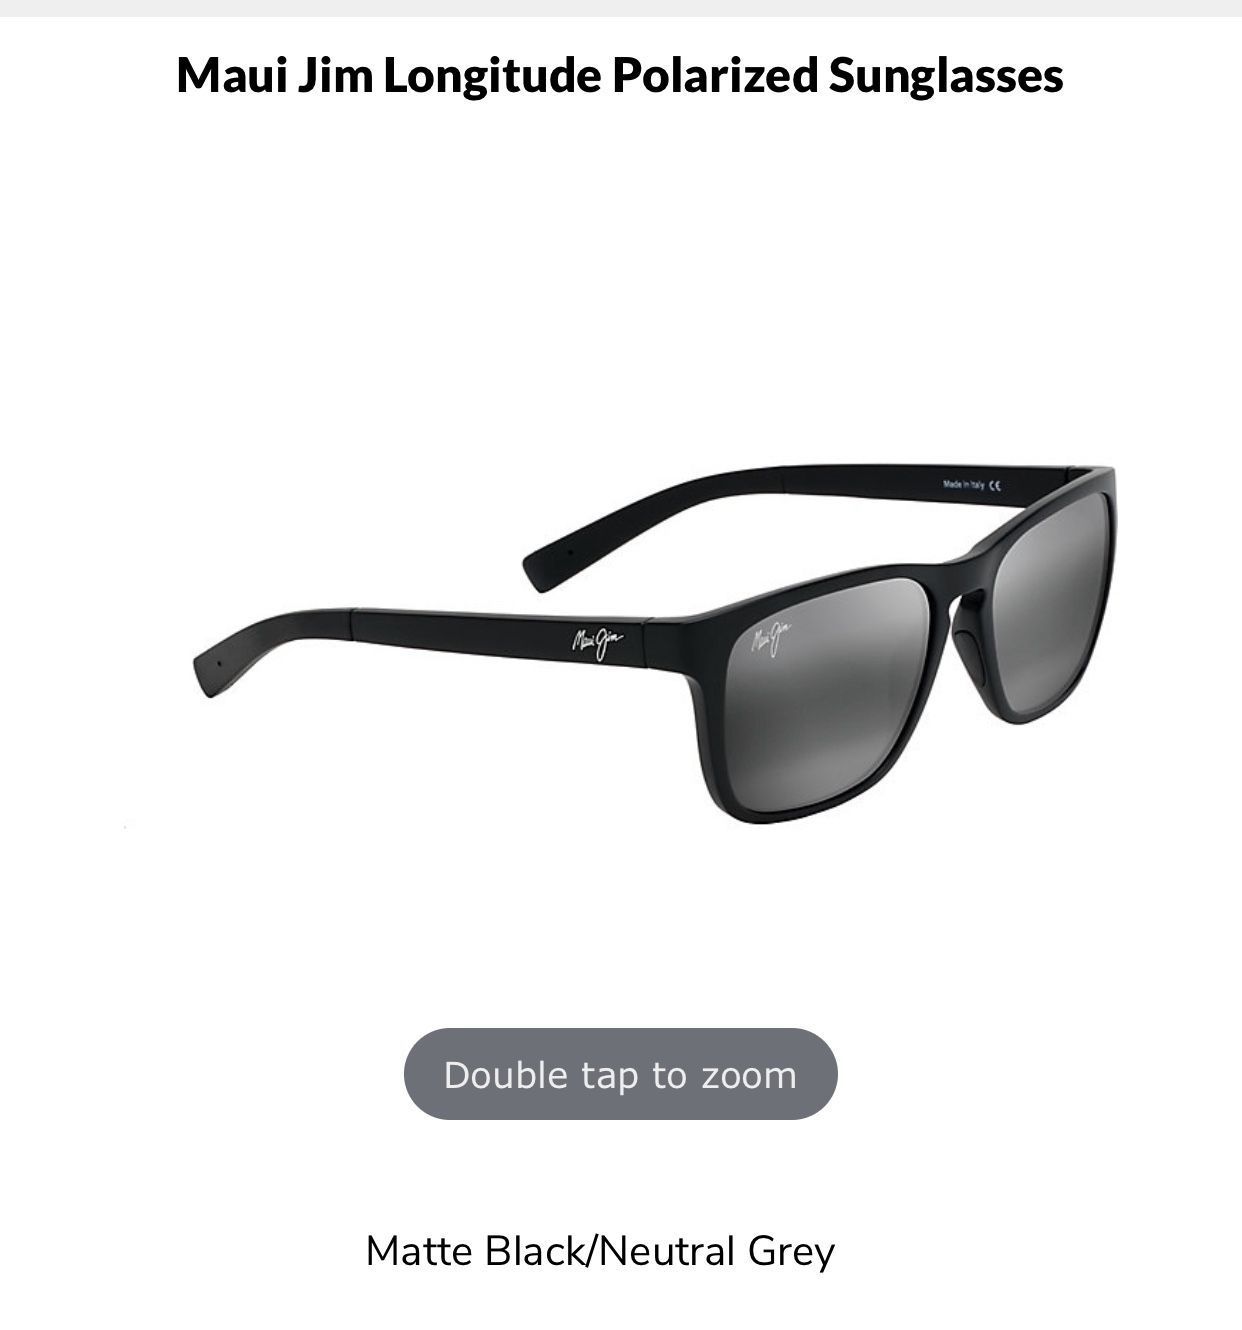 Maui Jim Longitude sunglasses brand new